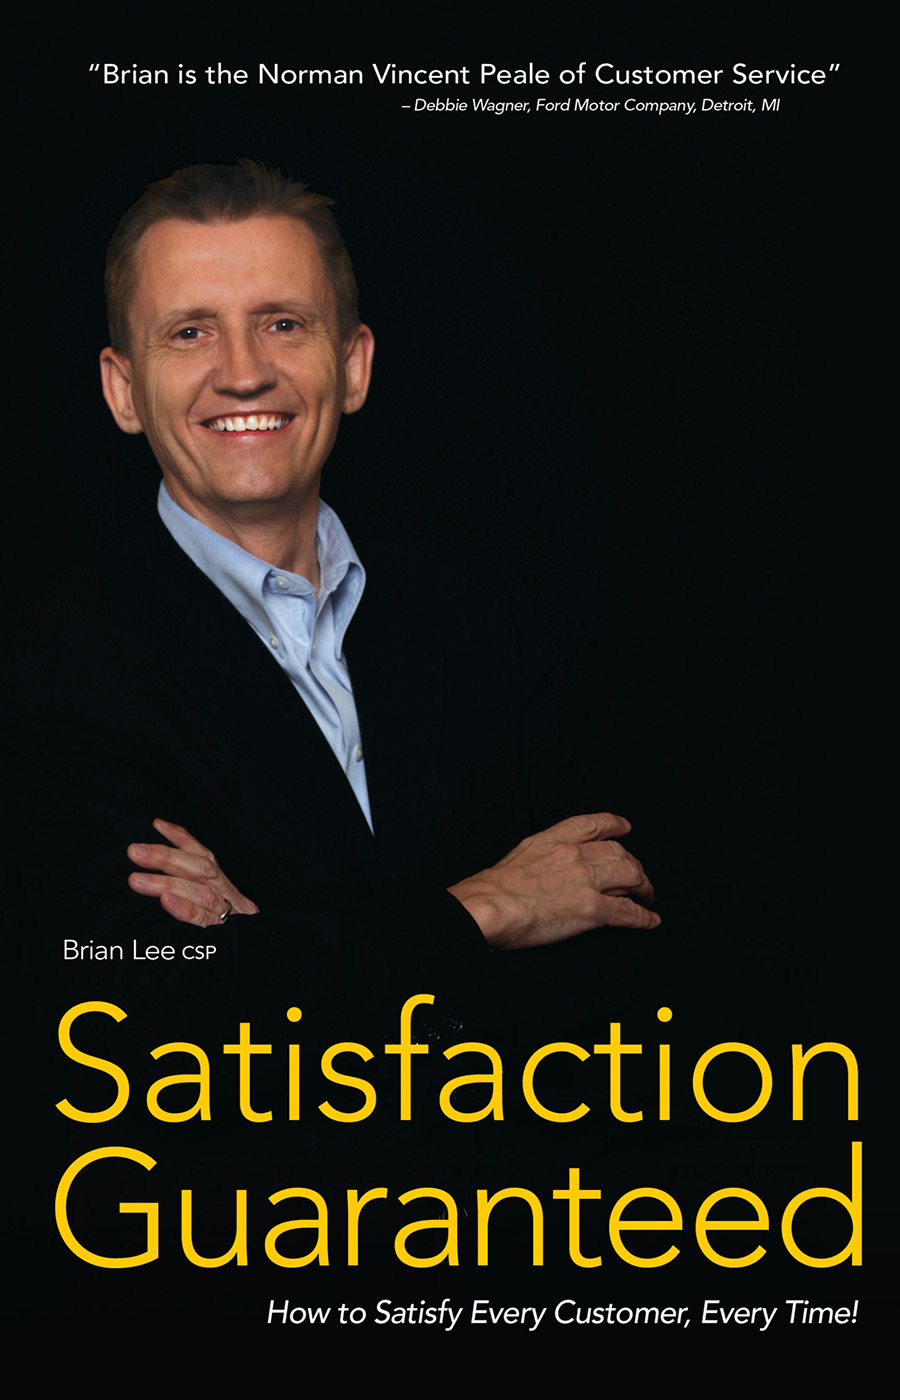 Satisfaction Guaranteed – Satisfy Every Customer Every Time